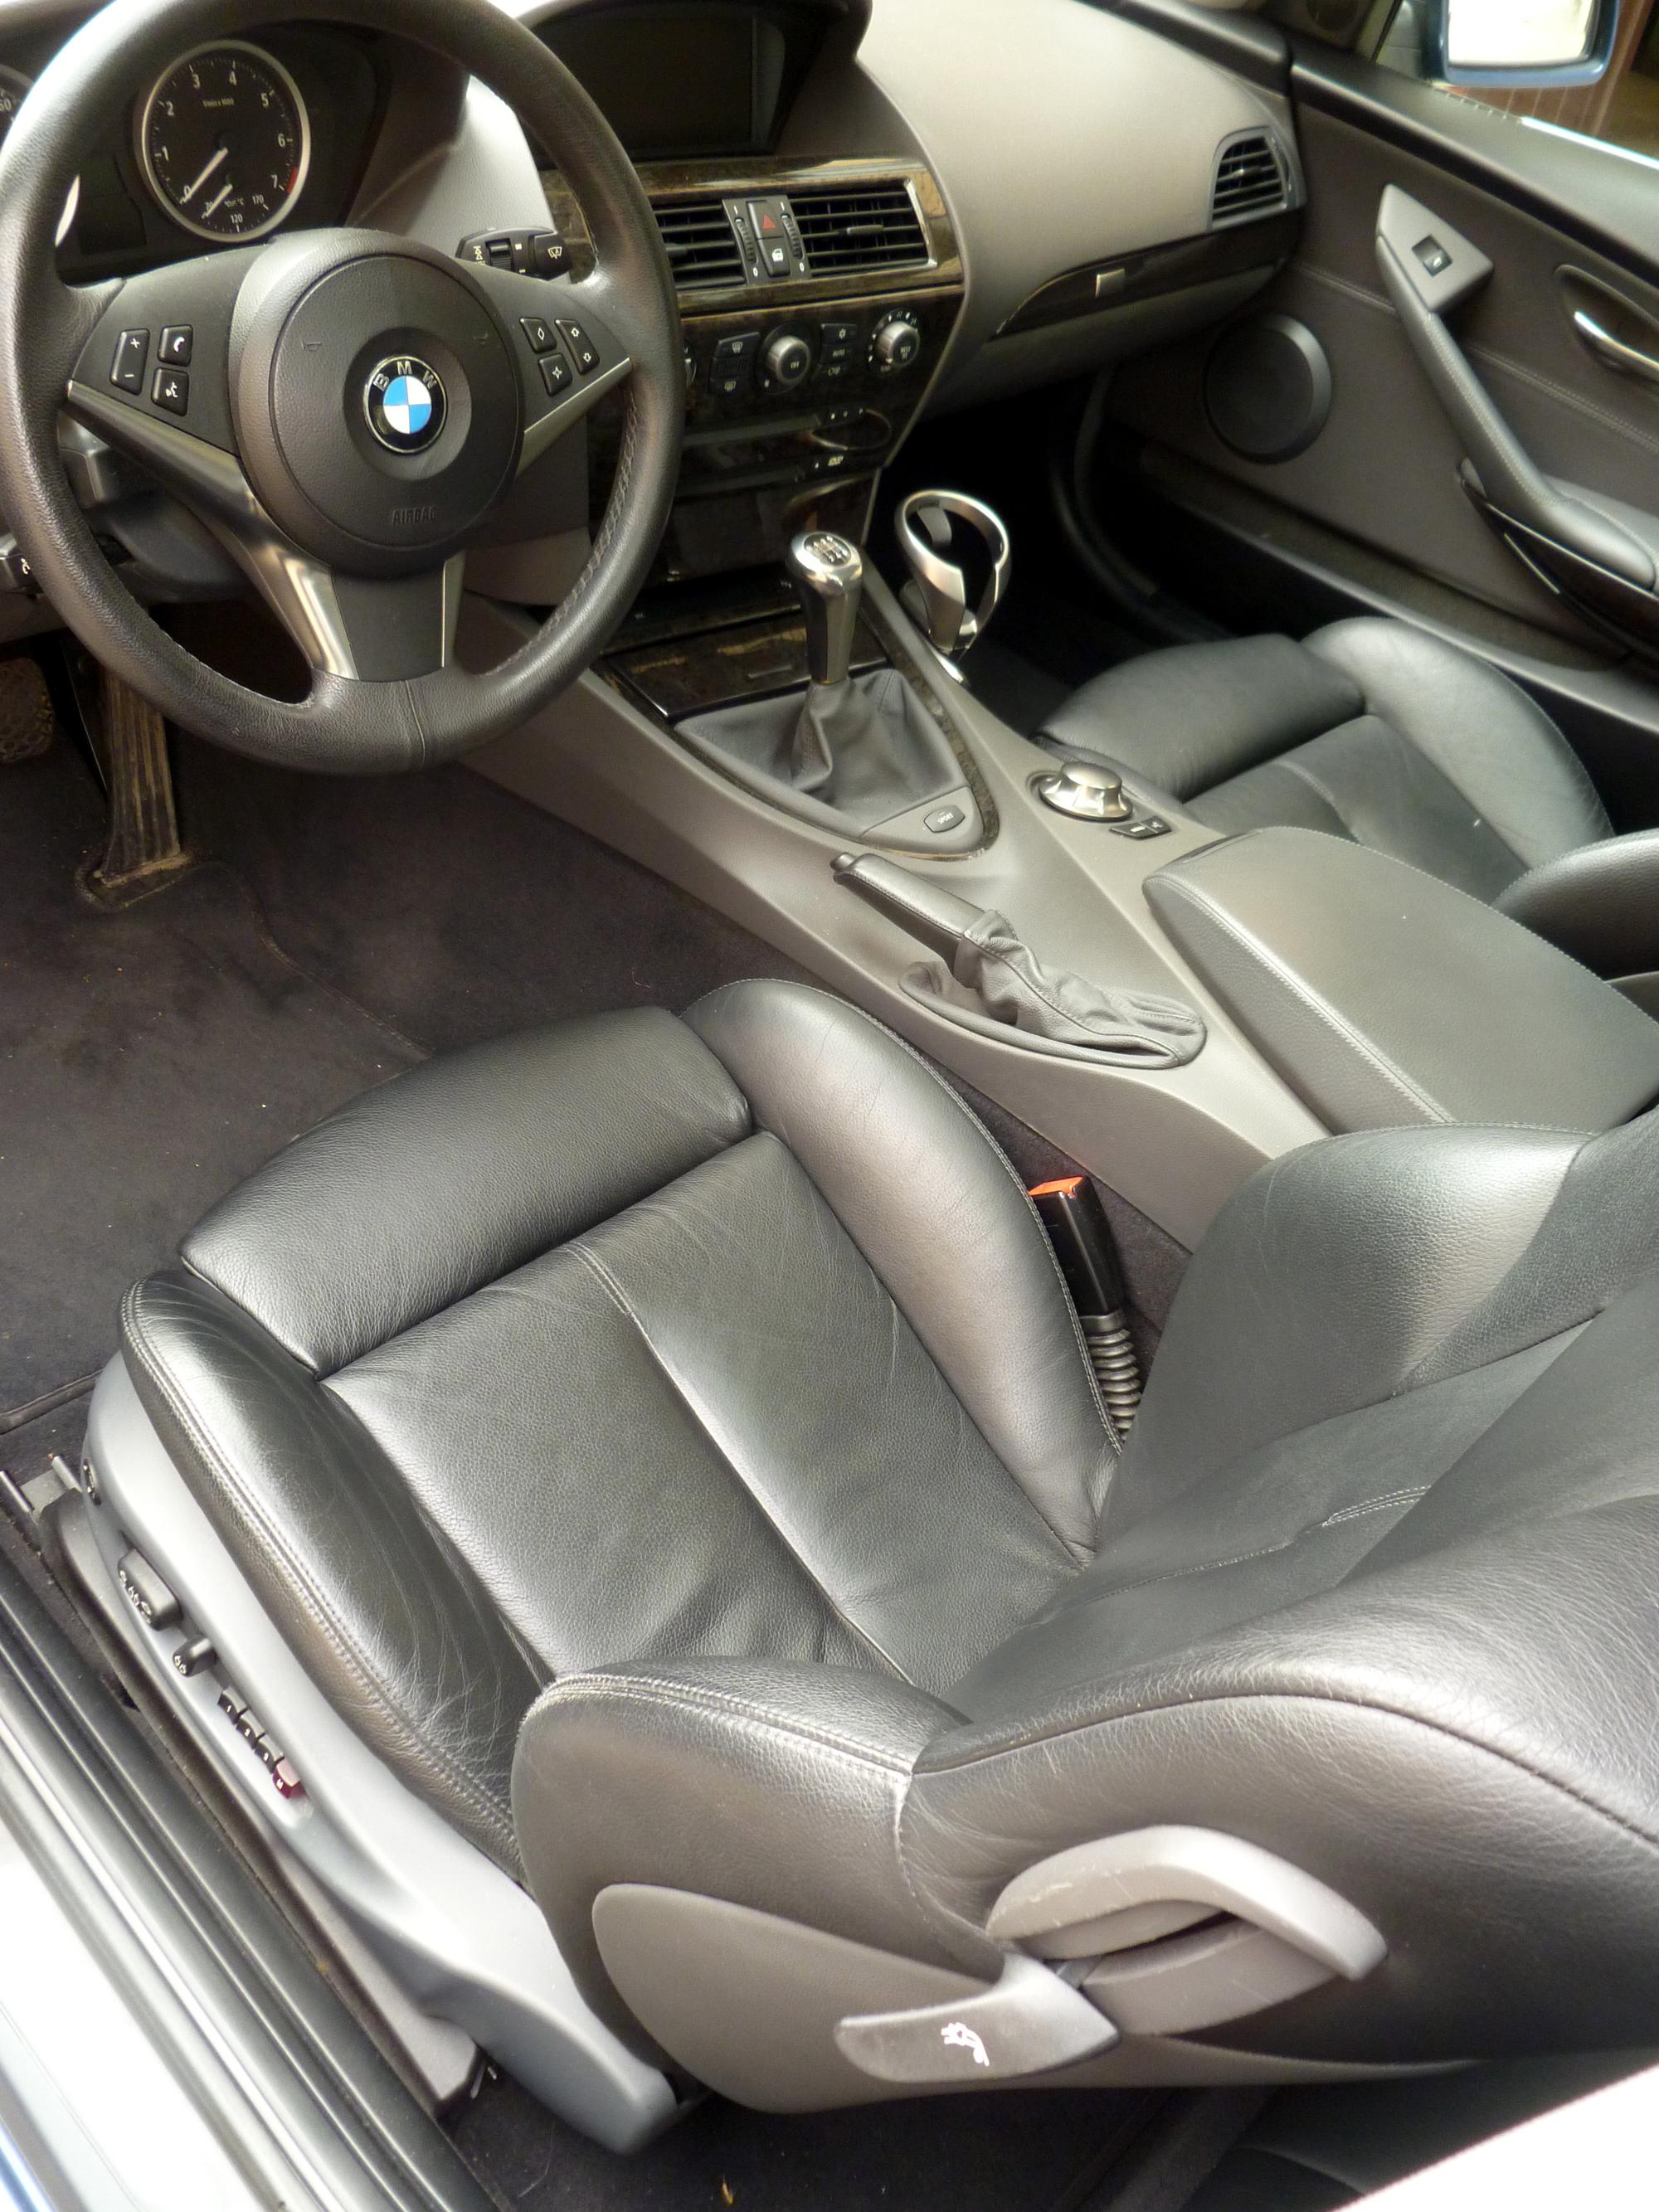 Vehicles - BMW 645ci Interior #2